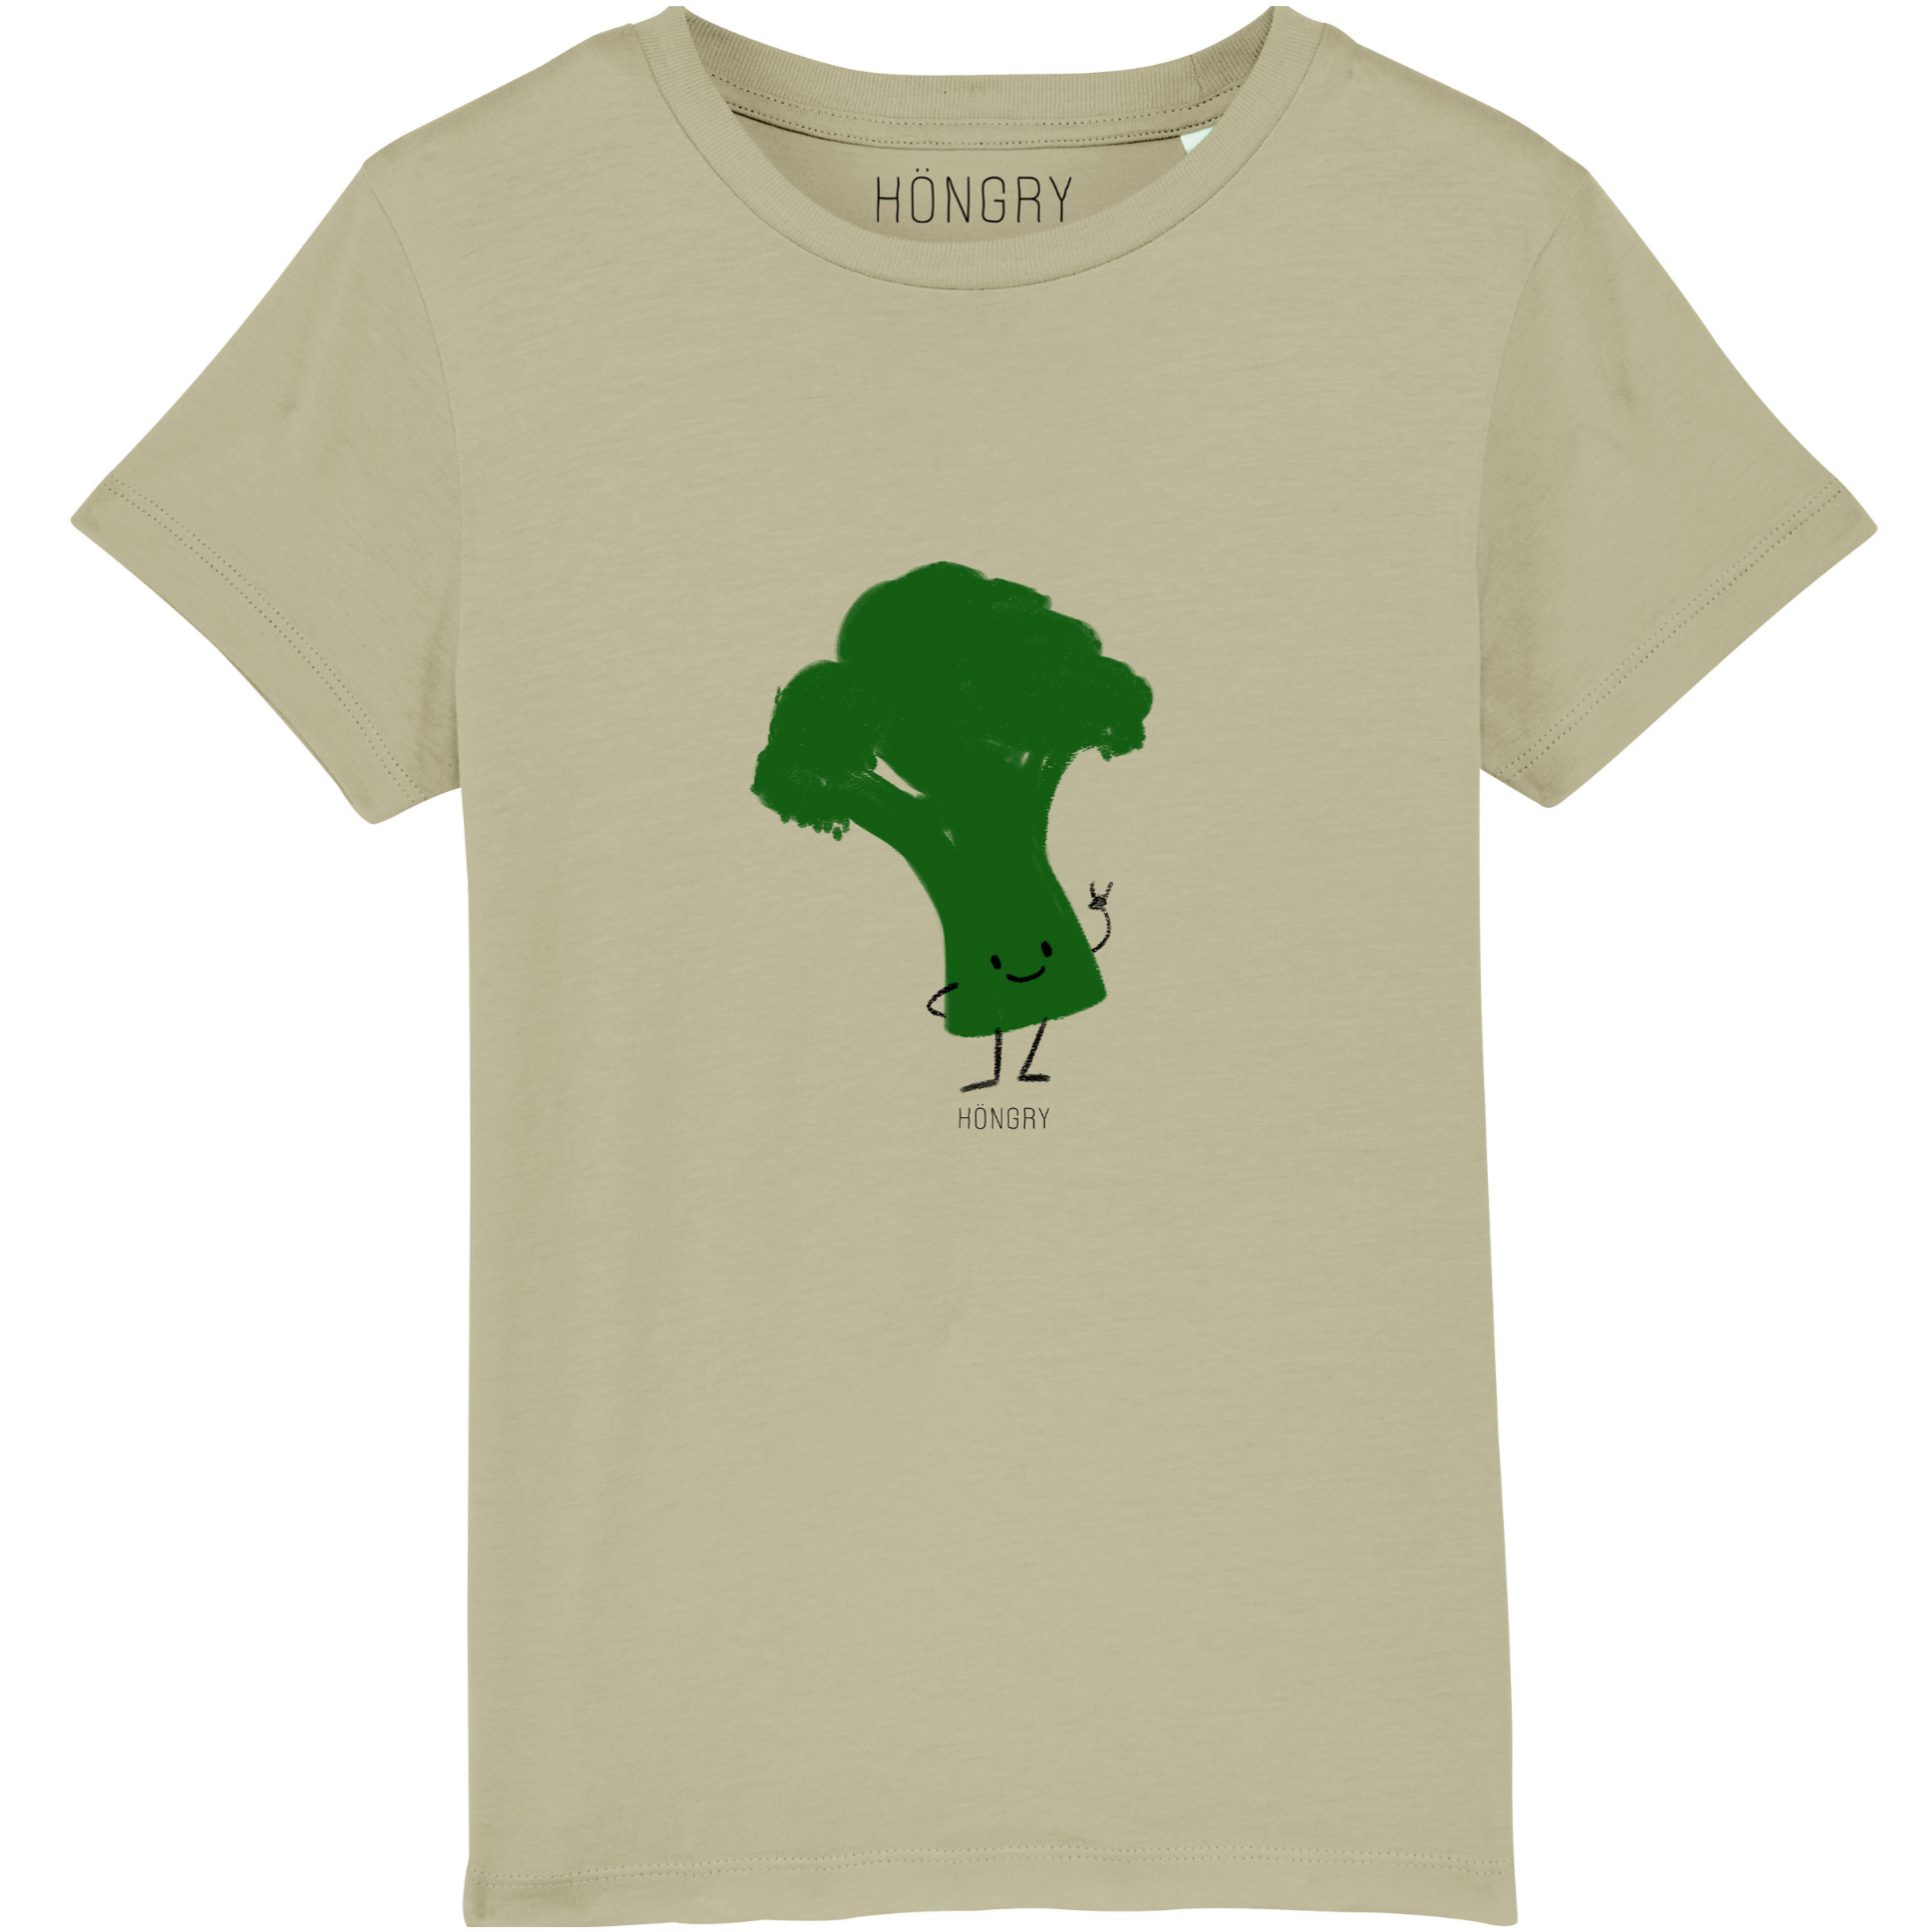 HÖNGRY Freddie Broccoli Organic Cotton T-Shirt in Sage Green for Girls and Boys 3Y - 8Y